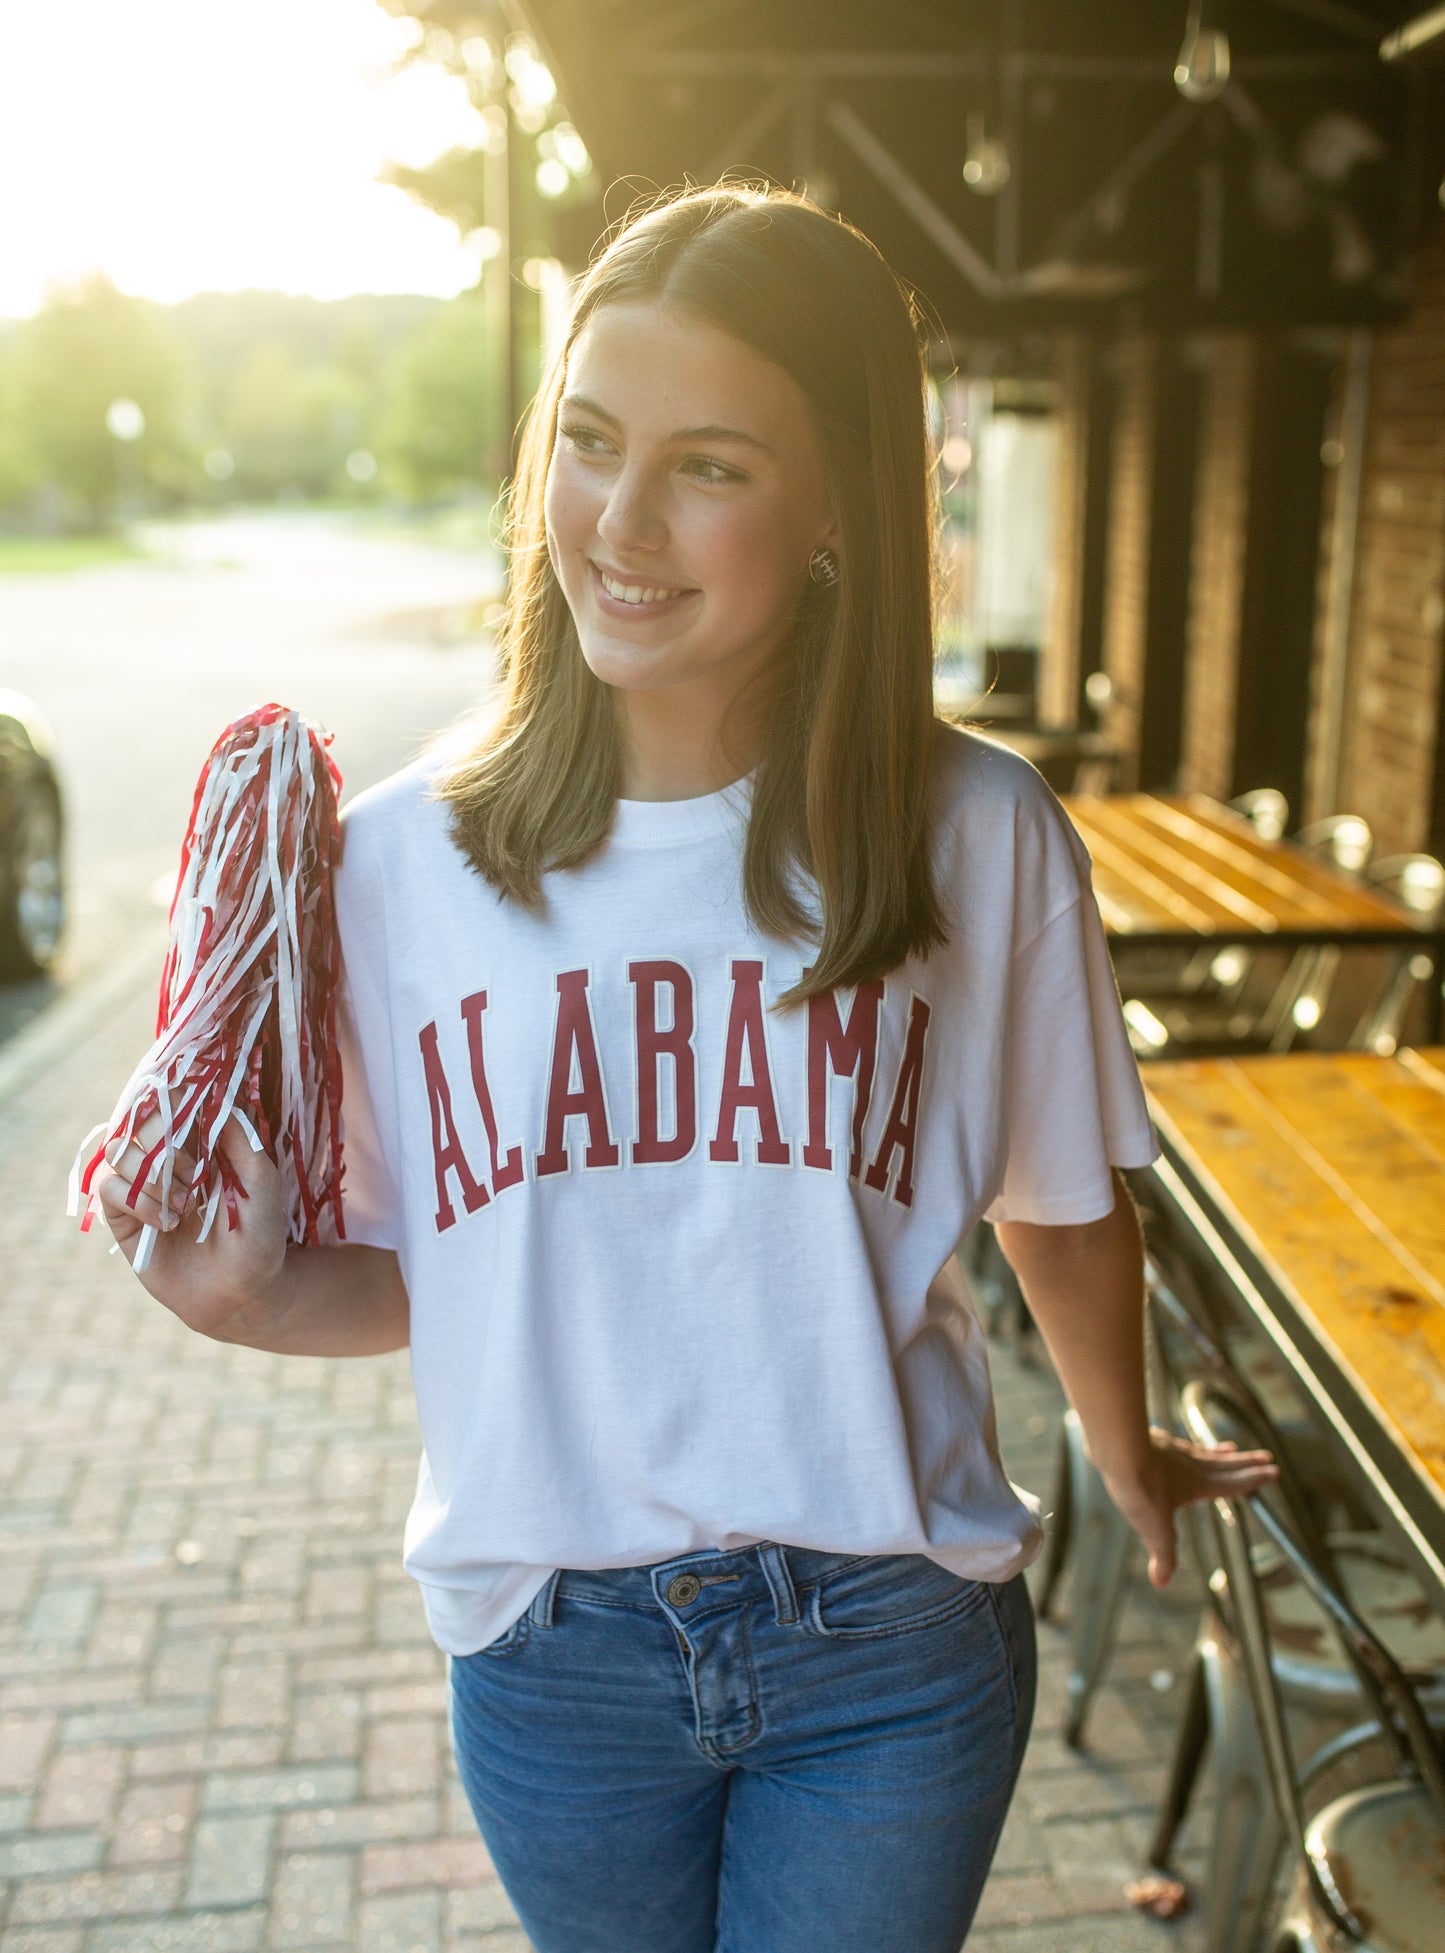 Alabama Crop Top- White